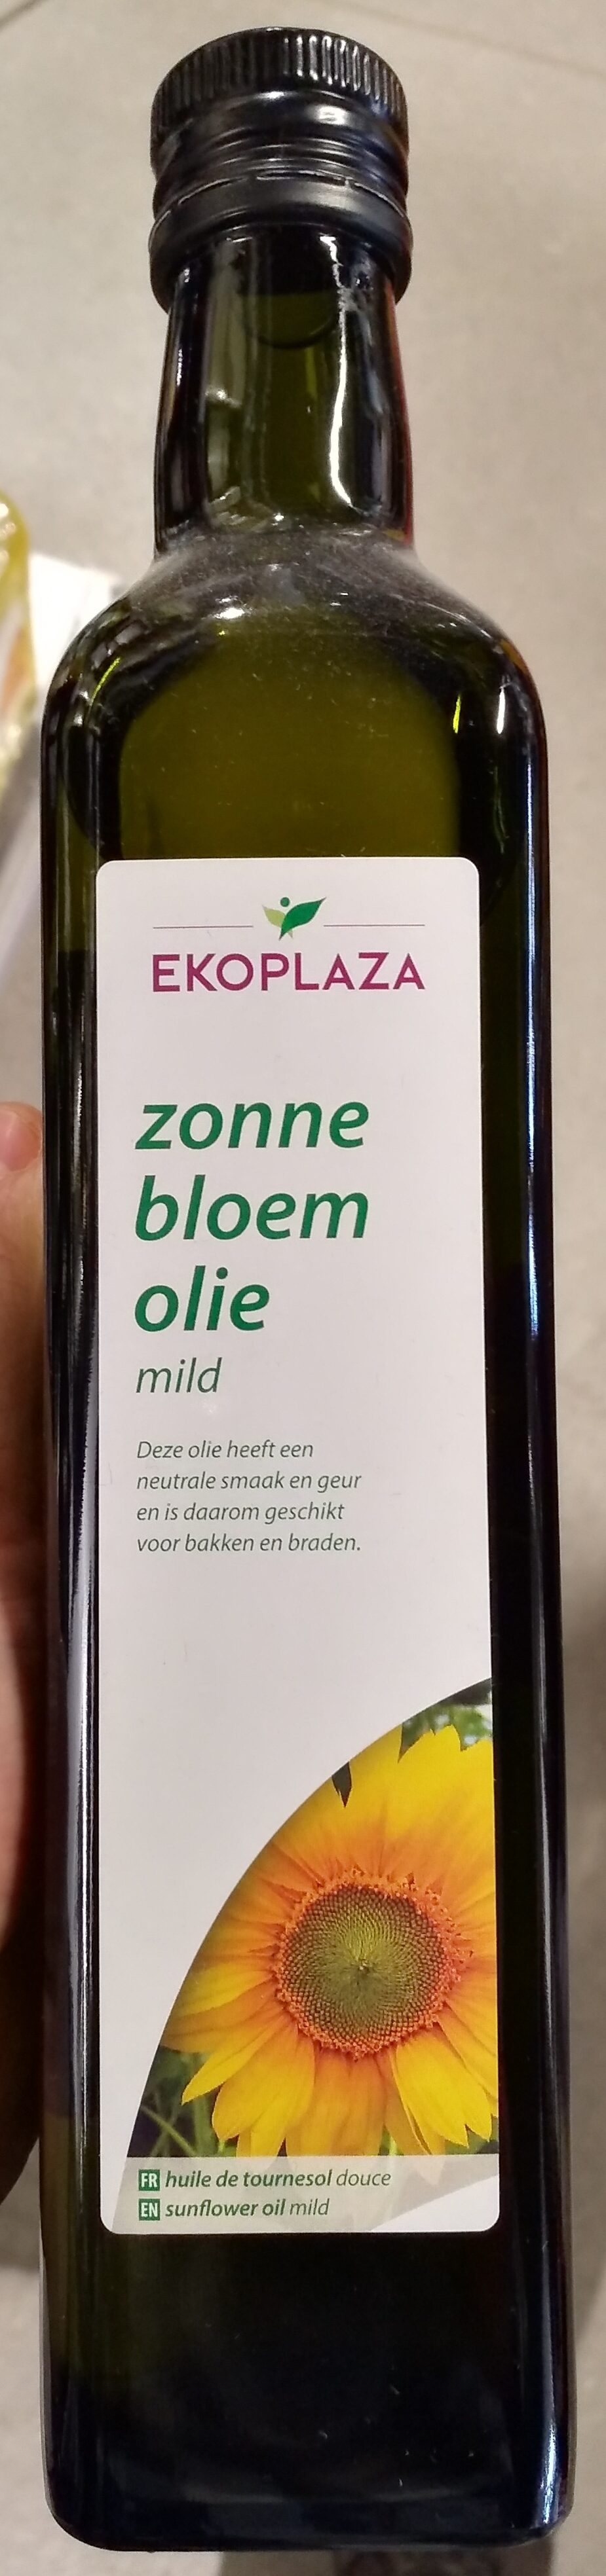 Zonnebloem olie mild - Product